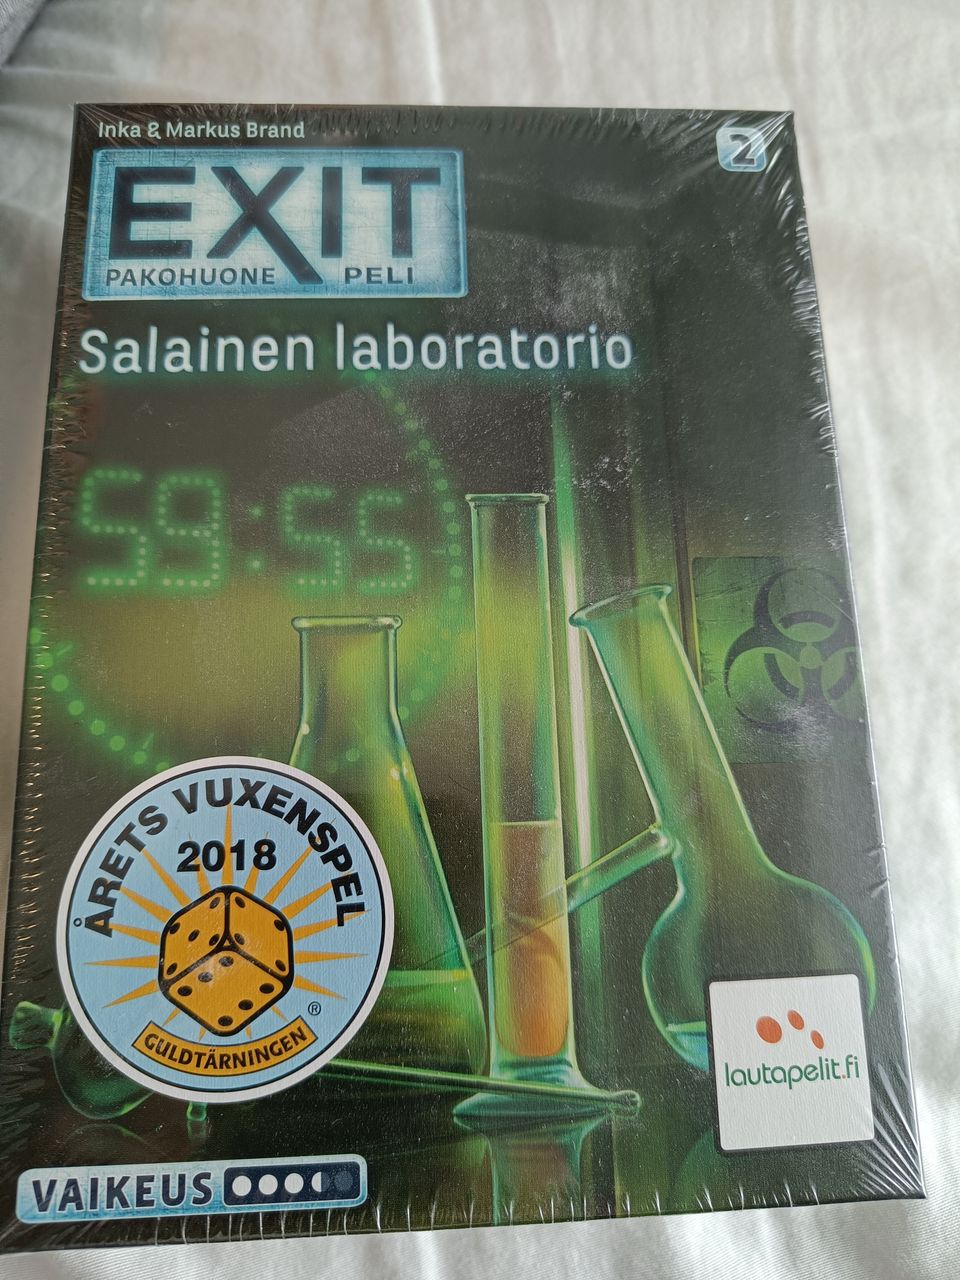 Exit pakohuonepeli : salainen laboratorio